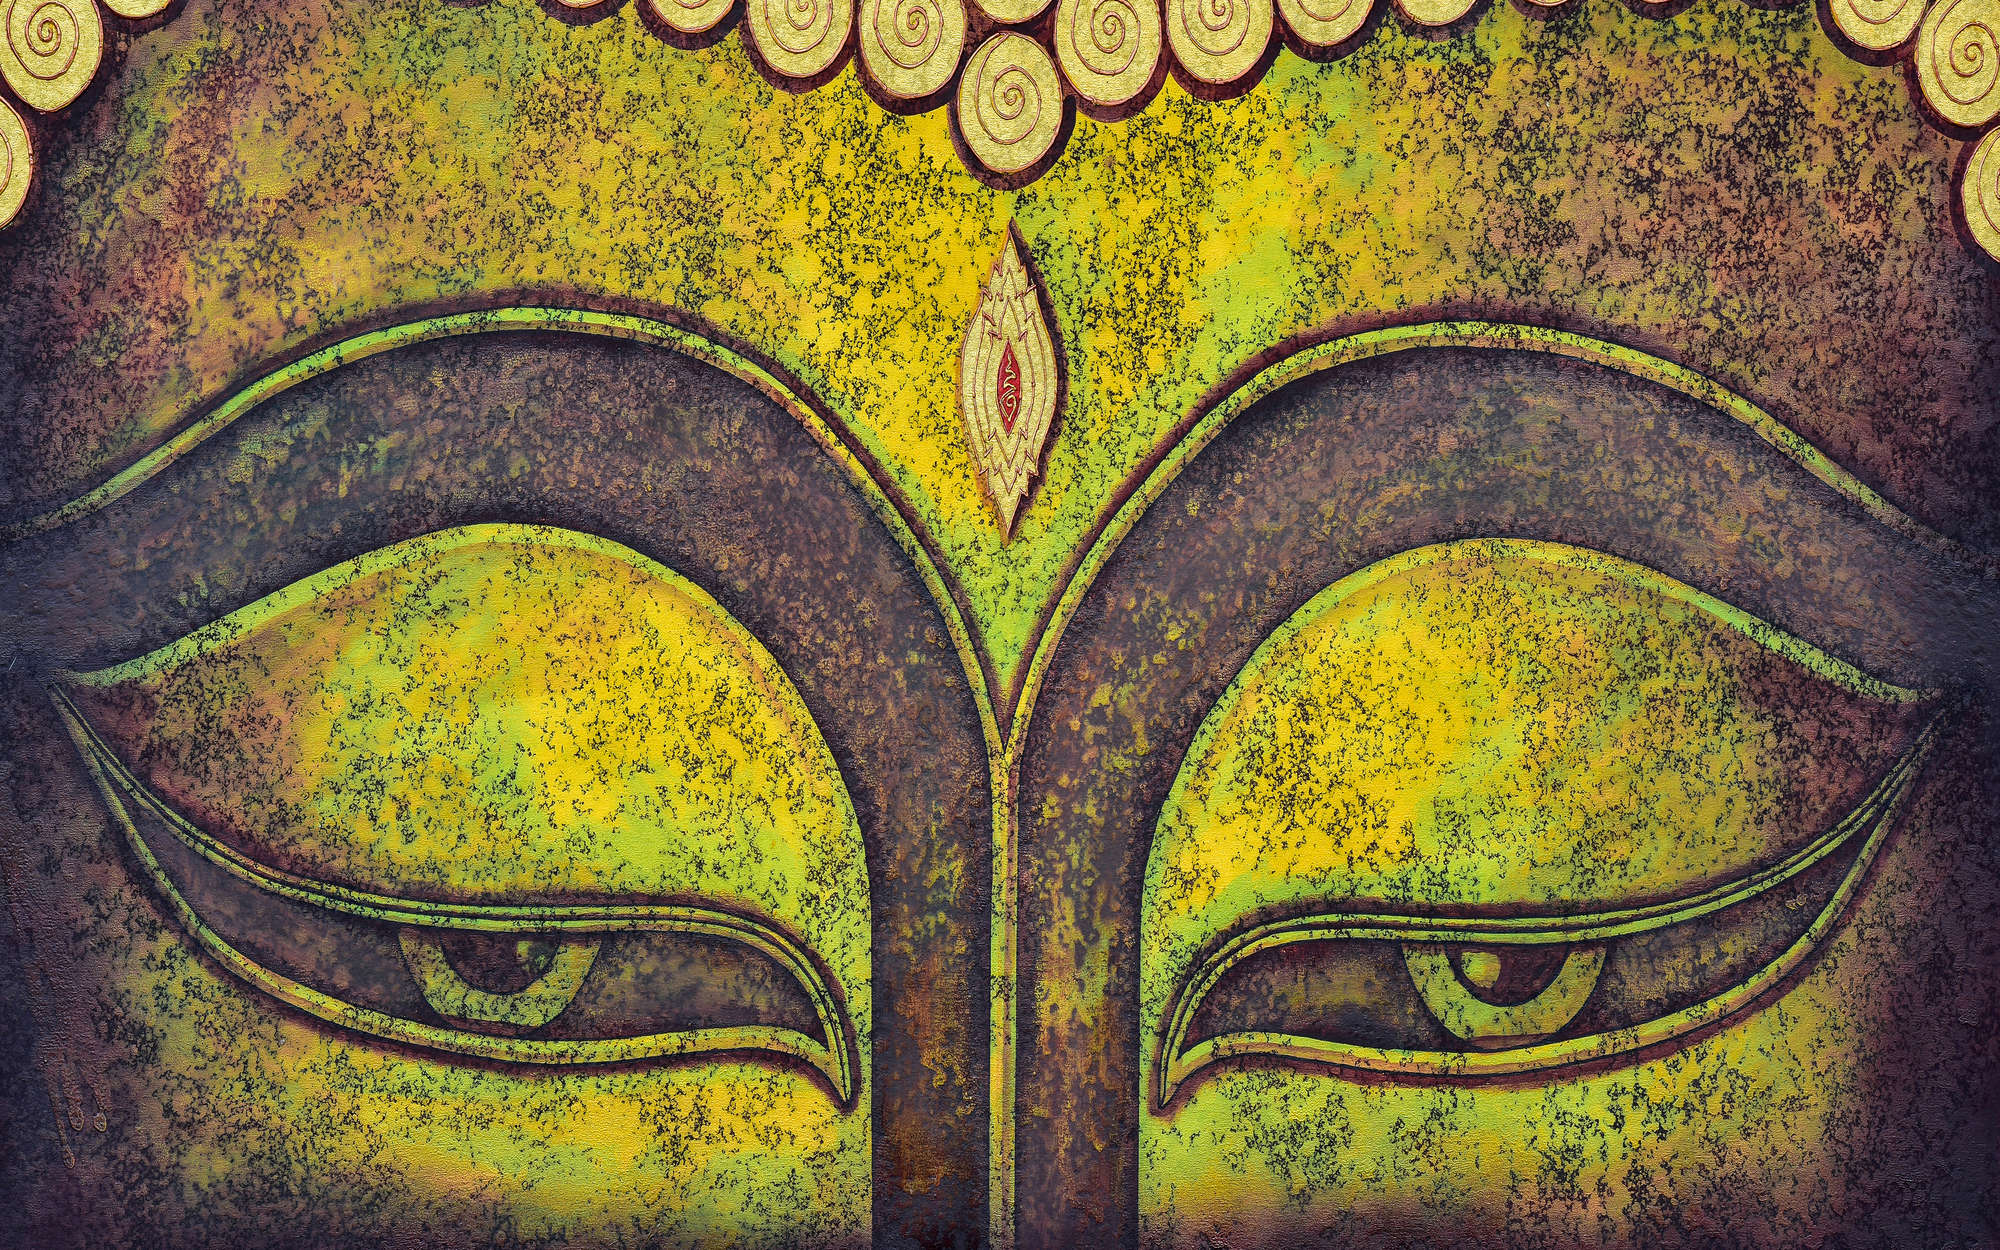             Photo wallpaper detail of Buddha face - Textured non-woven
        